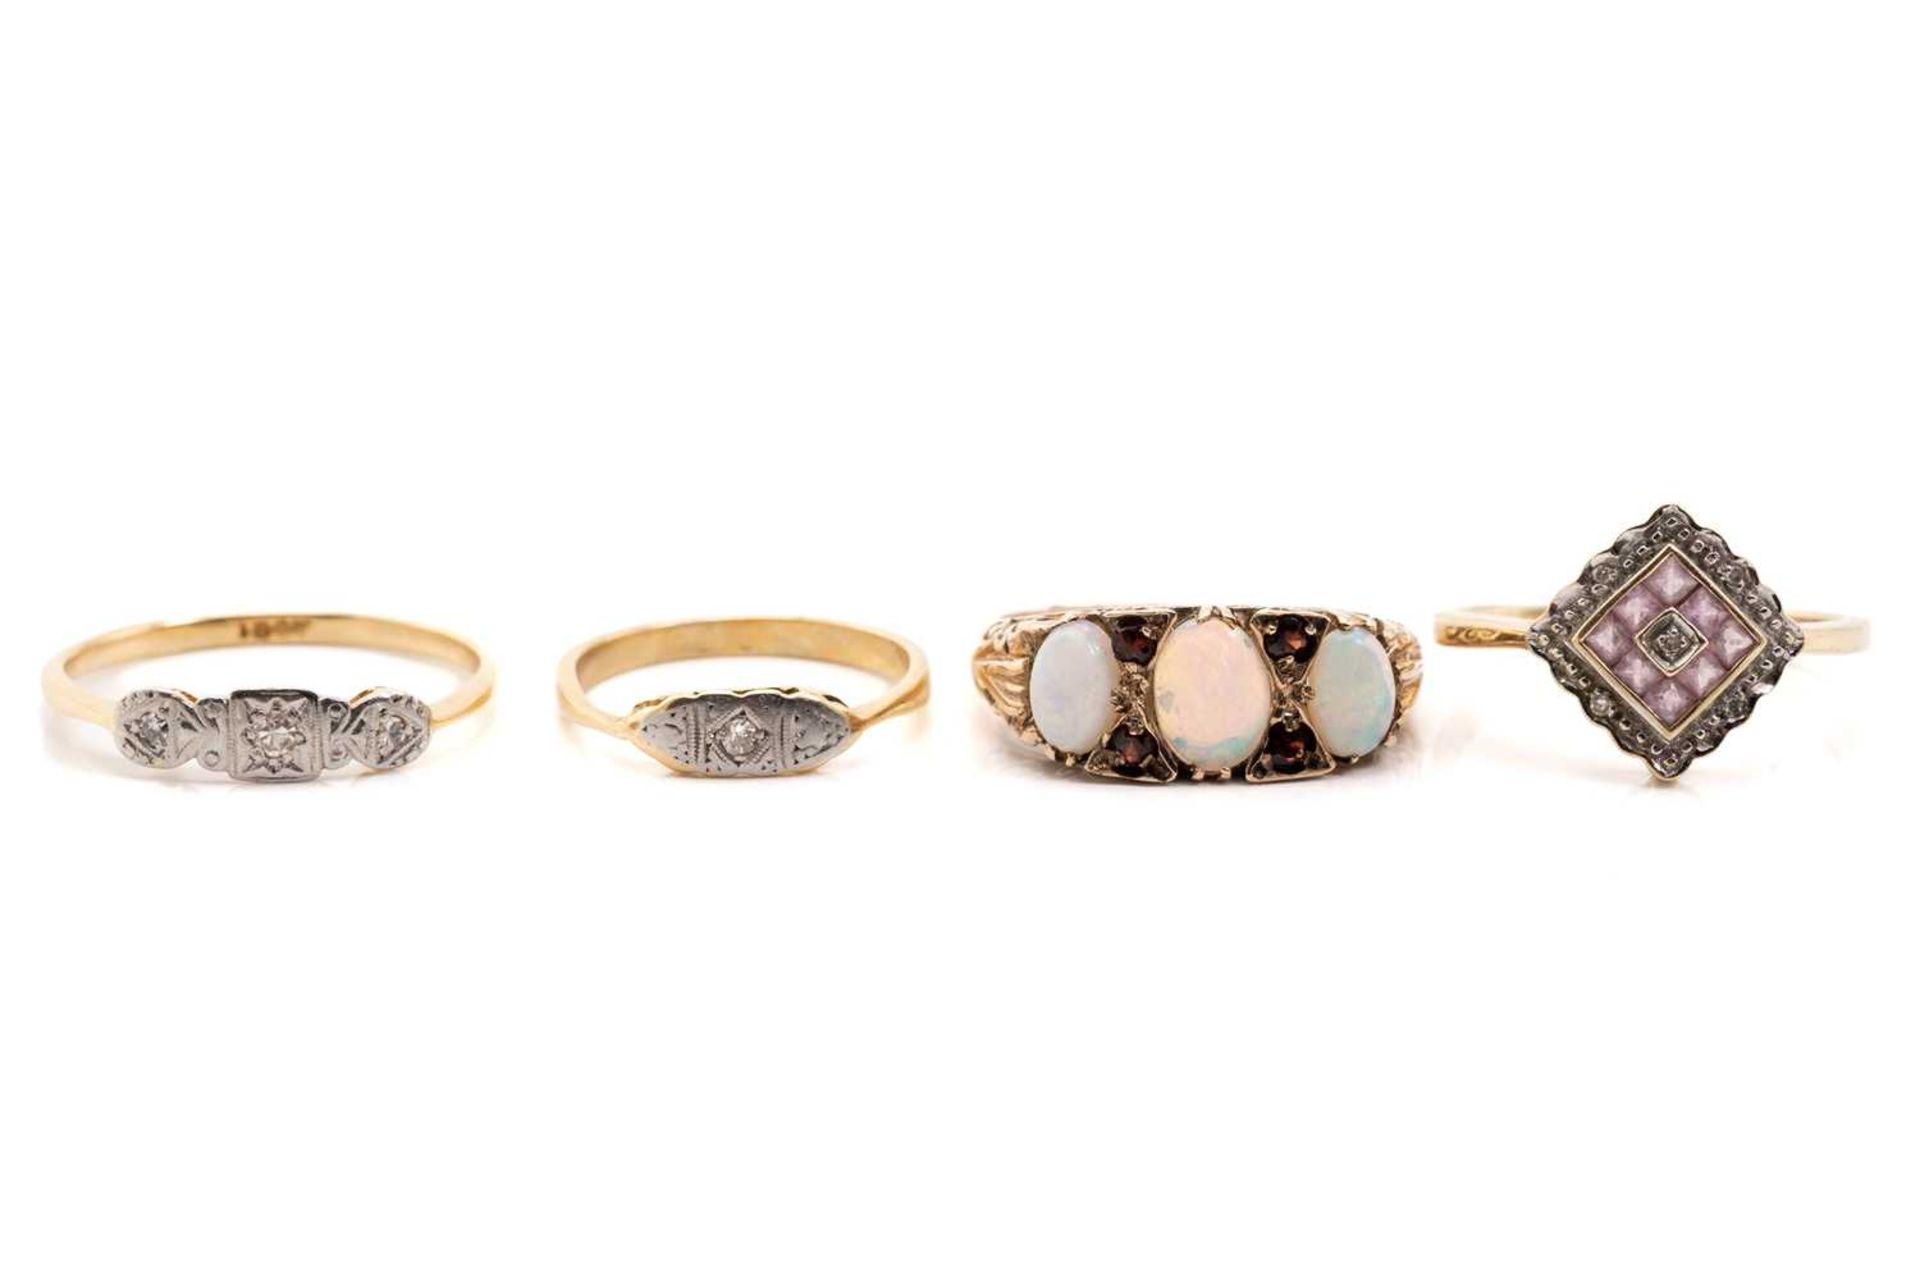 Four gem-set dress rings, including an Edwardian three stone diamond ring, illusion set in